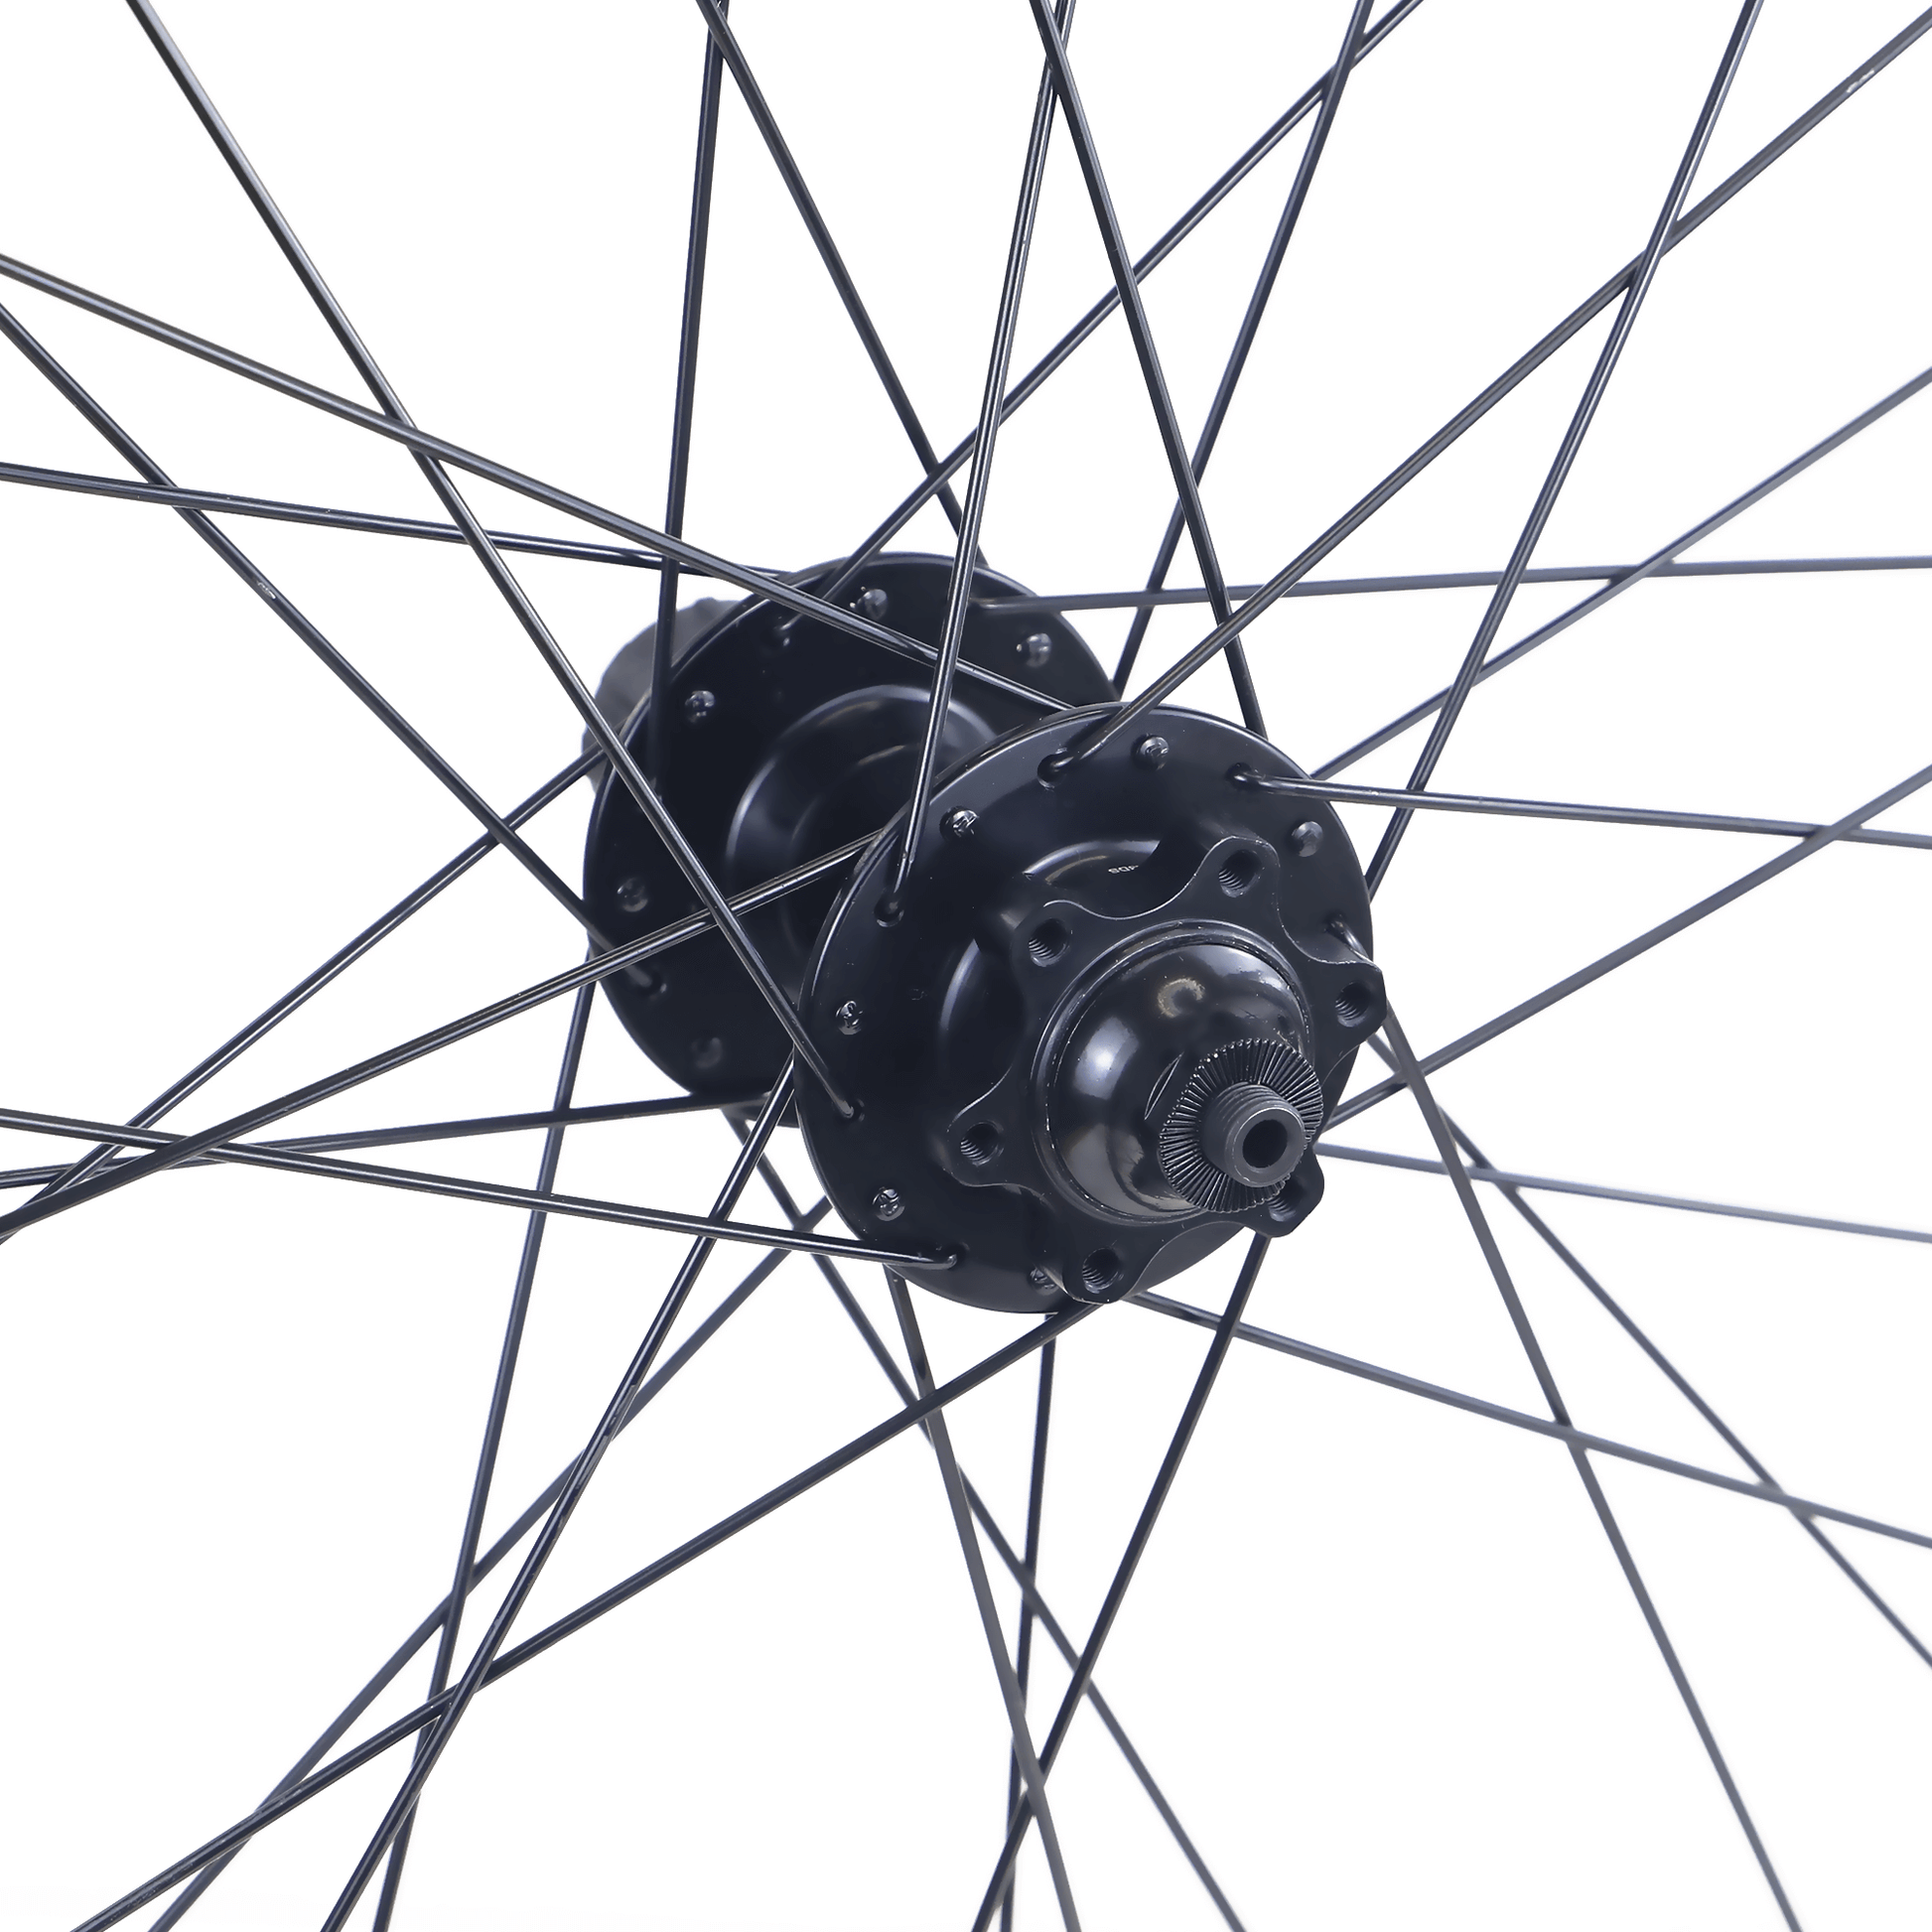 Zukka Rod Ring - 27.5” Mountain Bike Wheelset